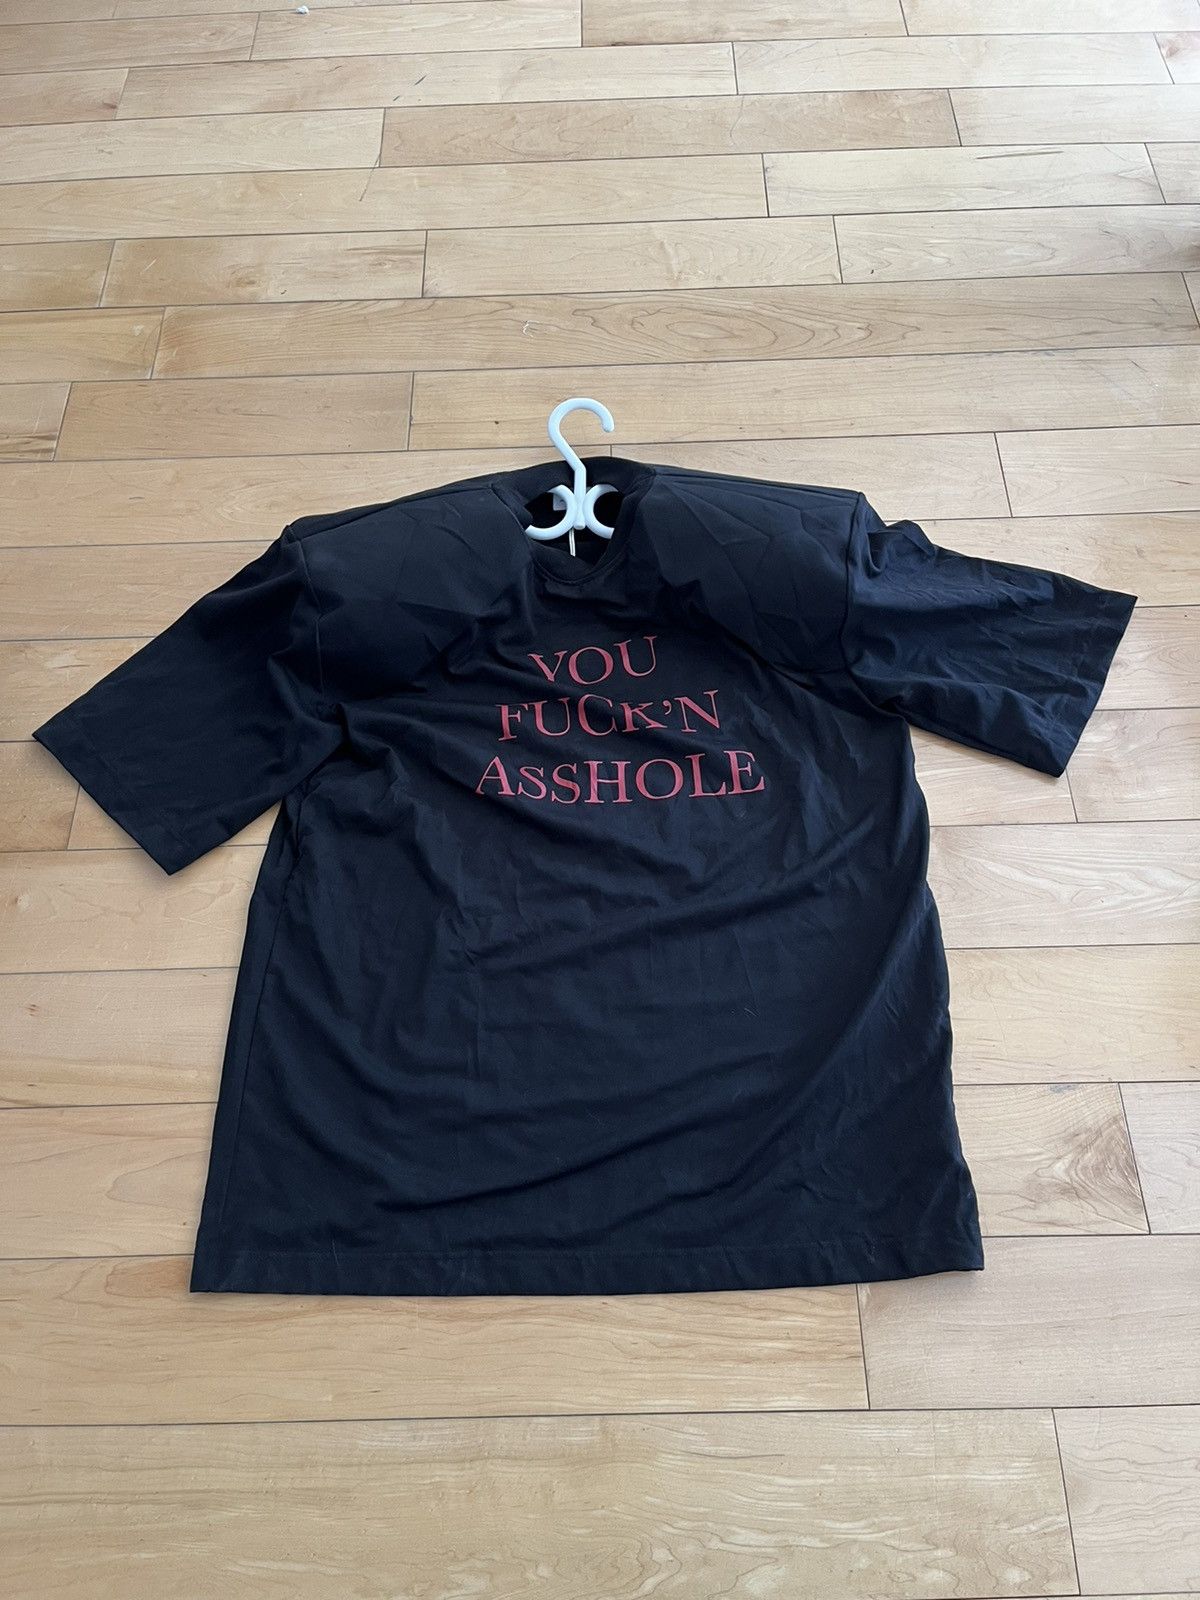 NWT - FW17 Vetements "You Fuck'n Asshole" Football t-shirt - 3